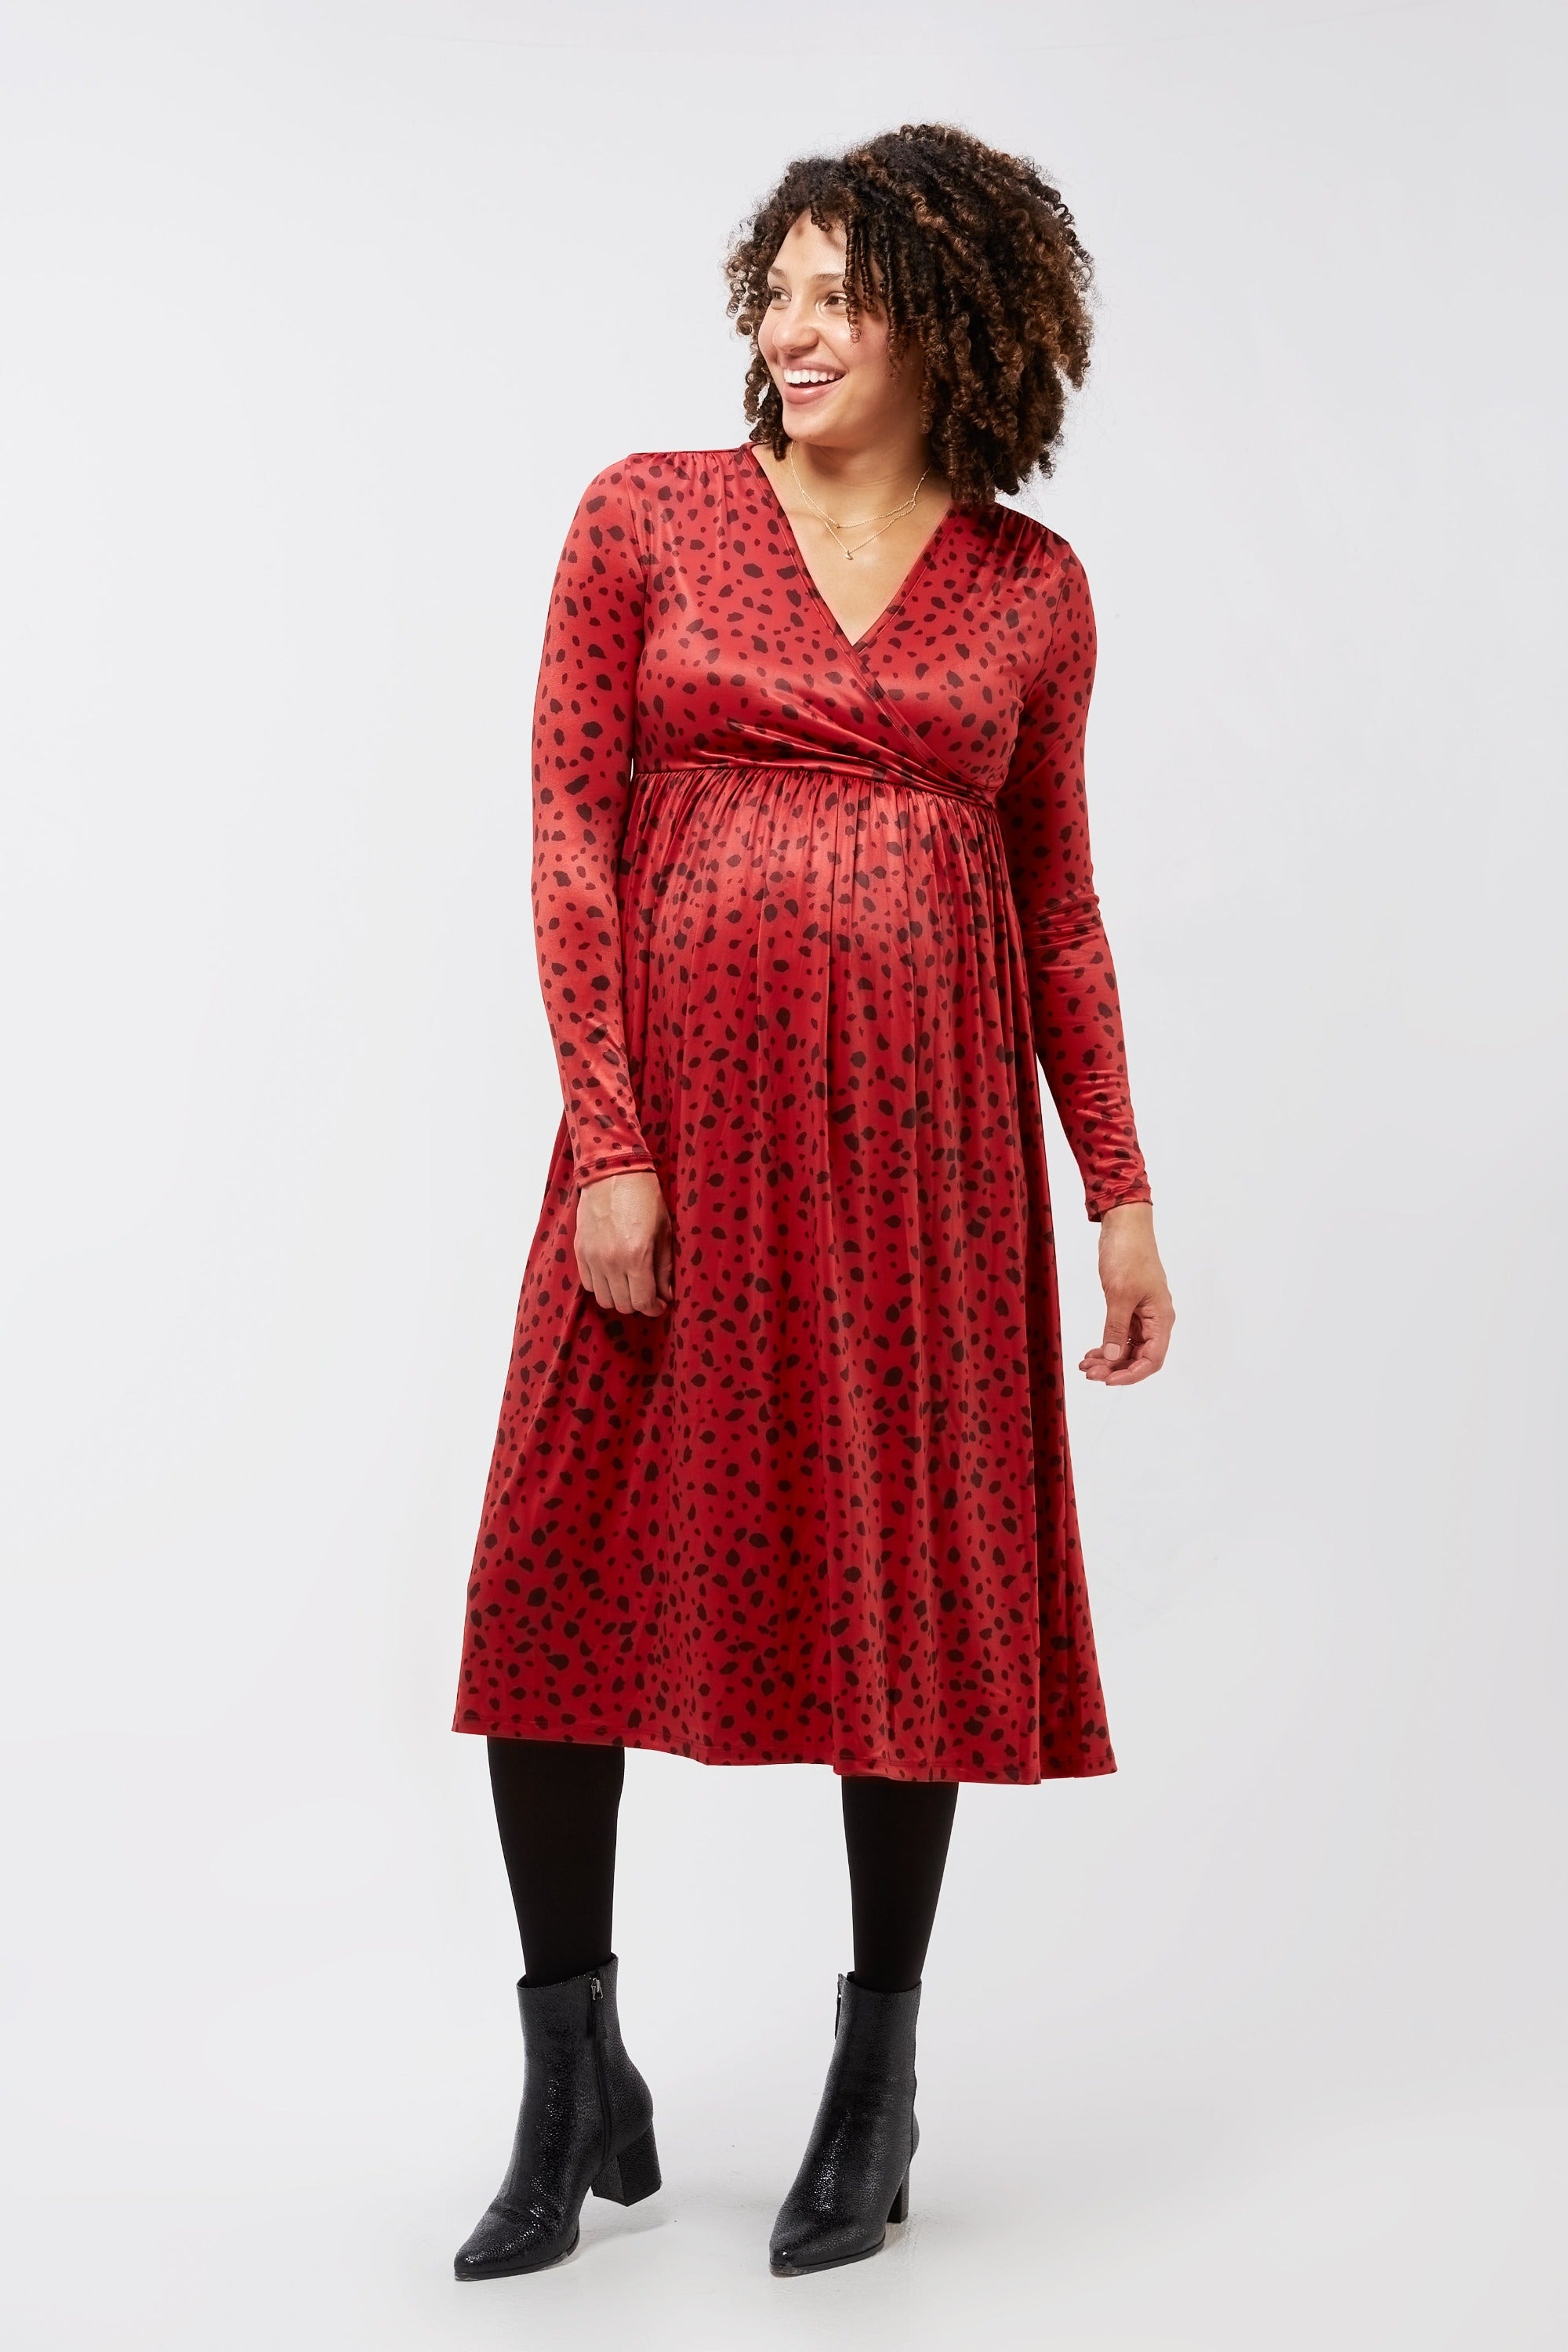 Augusta red dots maternity nursing dress